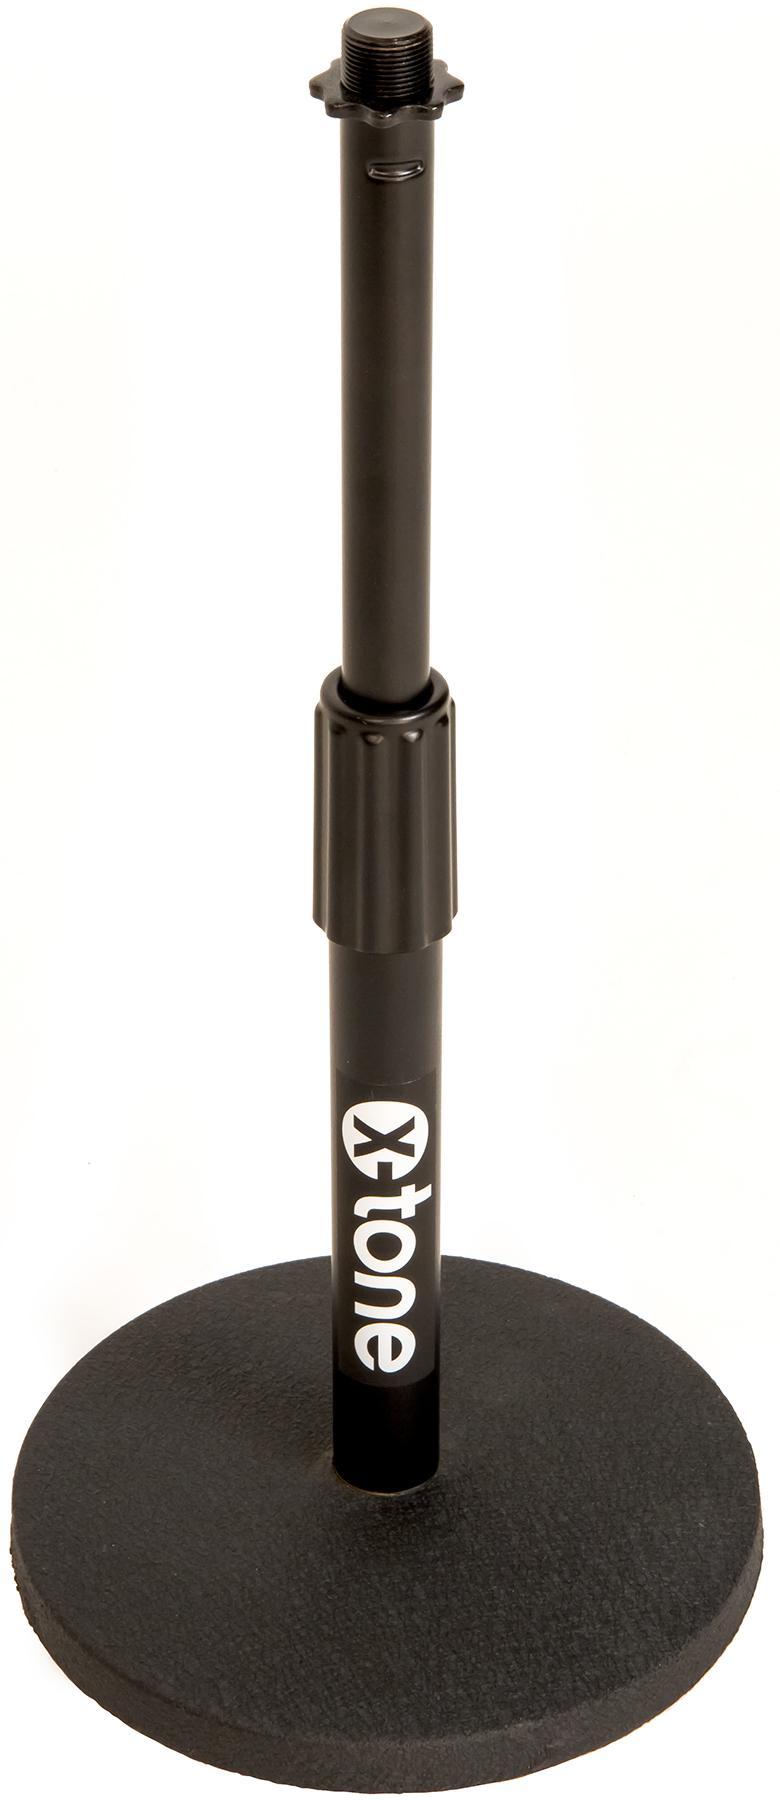 Microphone stand X-tone xh 6010